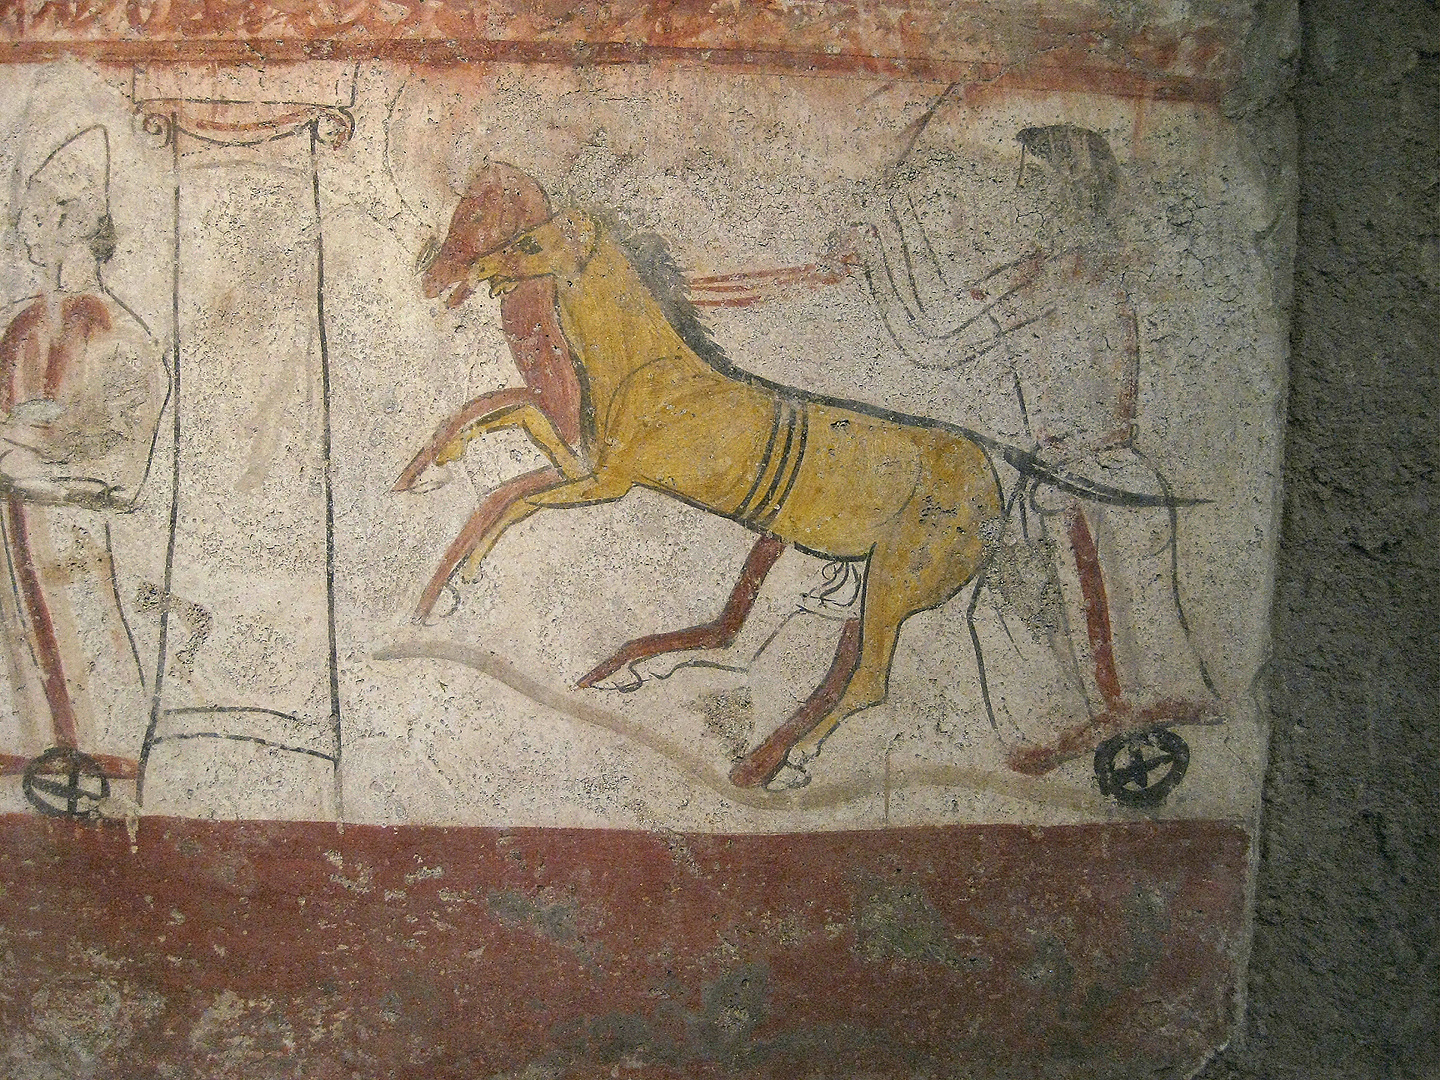 Lucanische graftombe, Paestum (Campani. Itali); Lucanian tomb, Paestum (Campania, Italy)